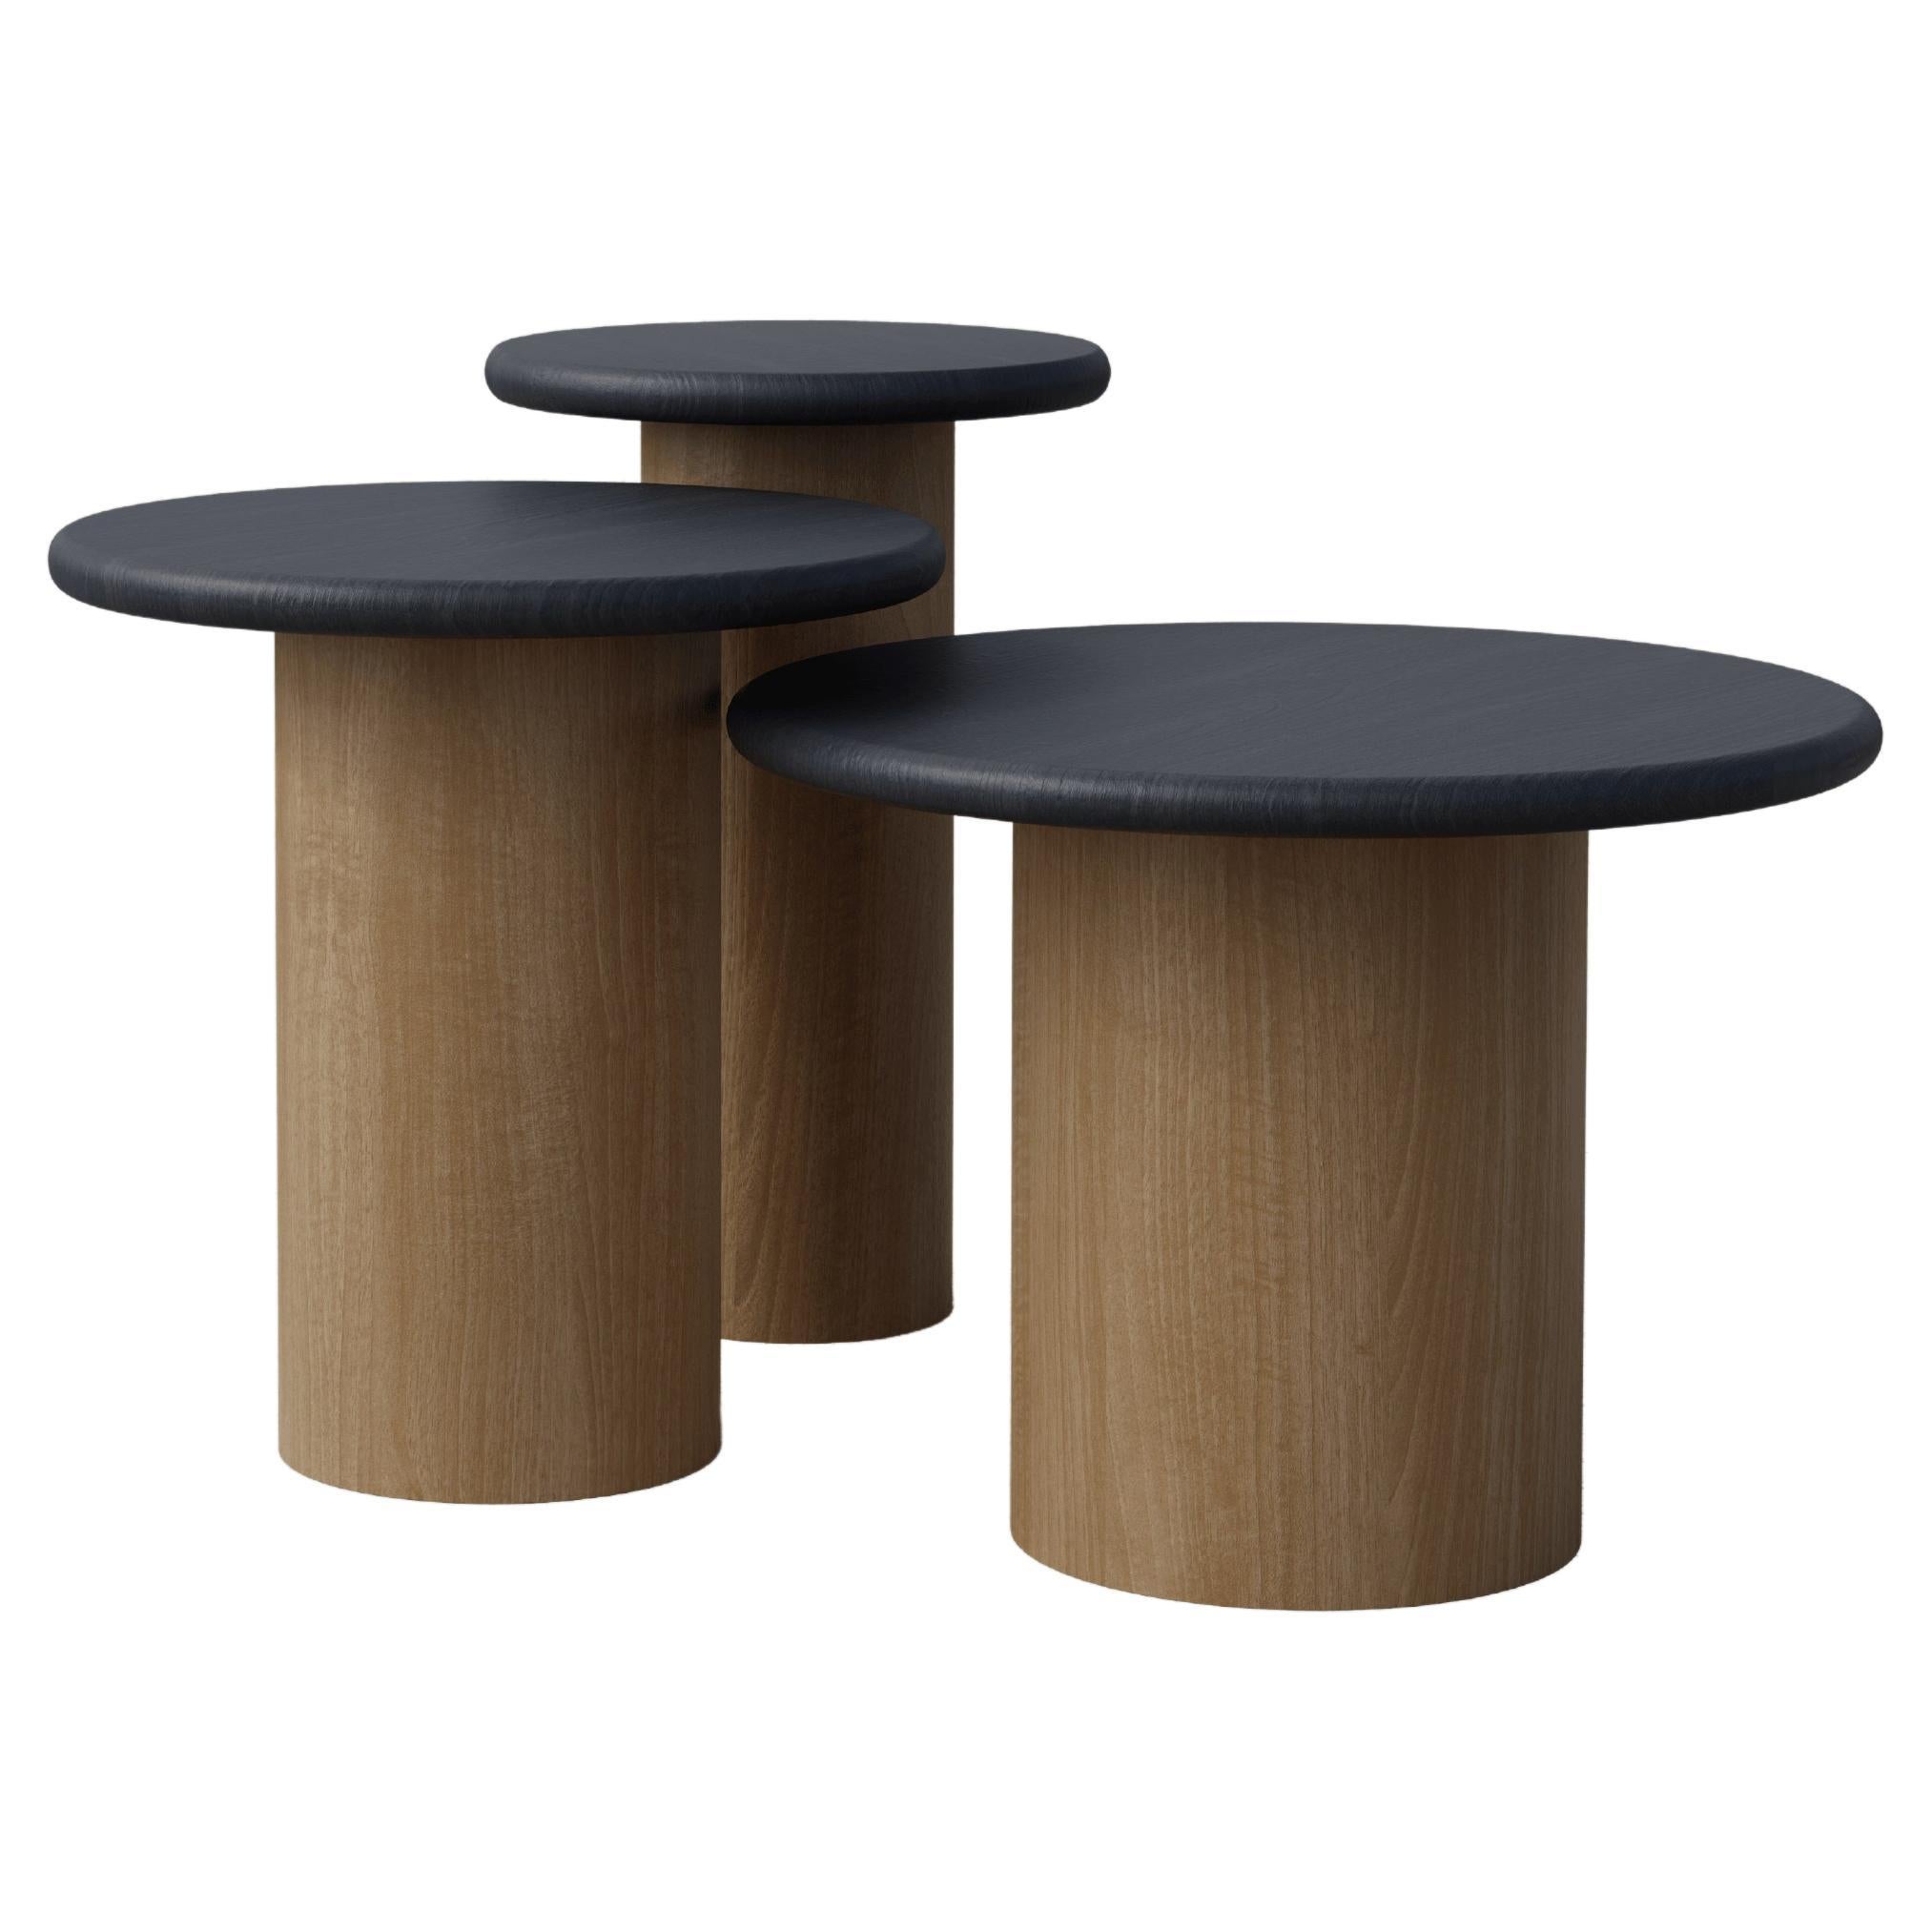 Raindrop Side Table Set, 300, 400, 500, Black Oak / Oak. For Sale